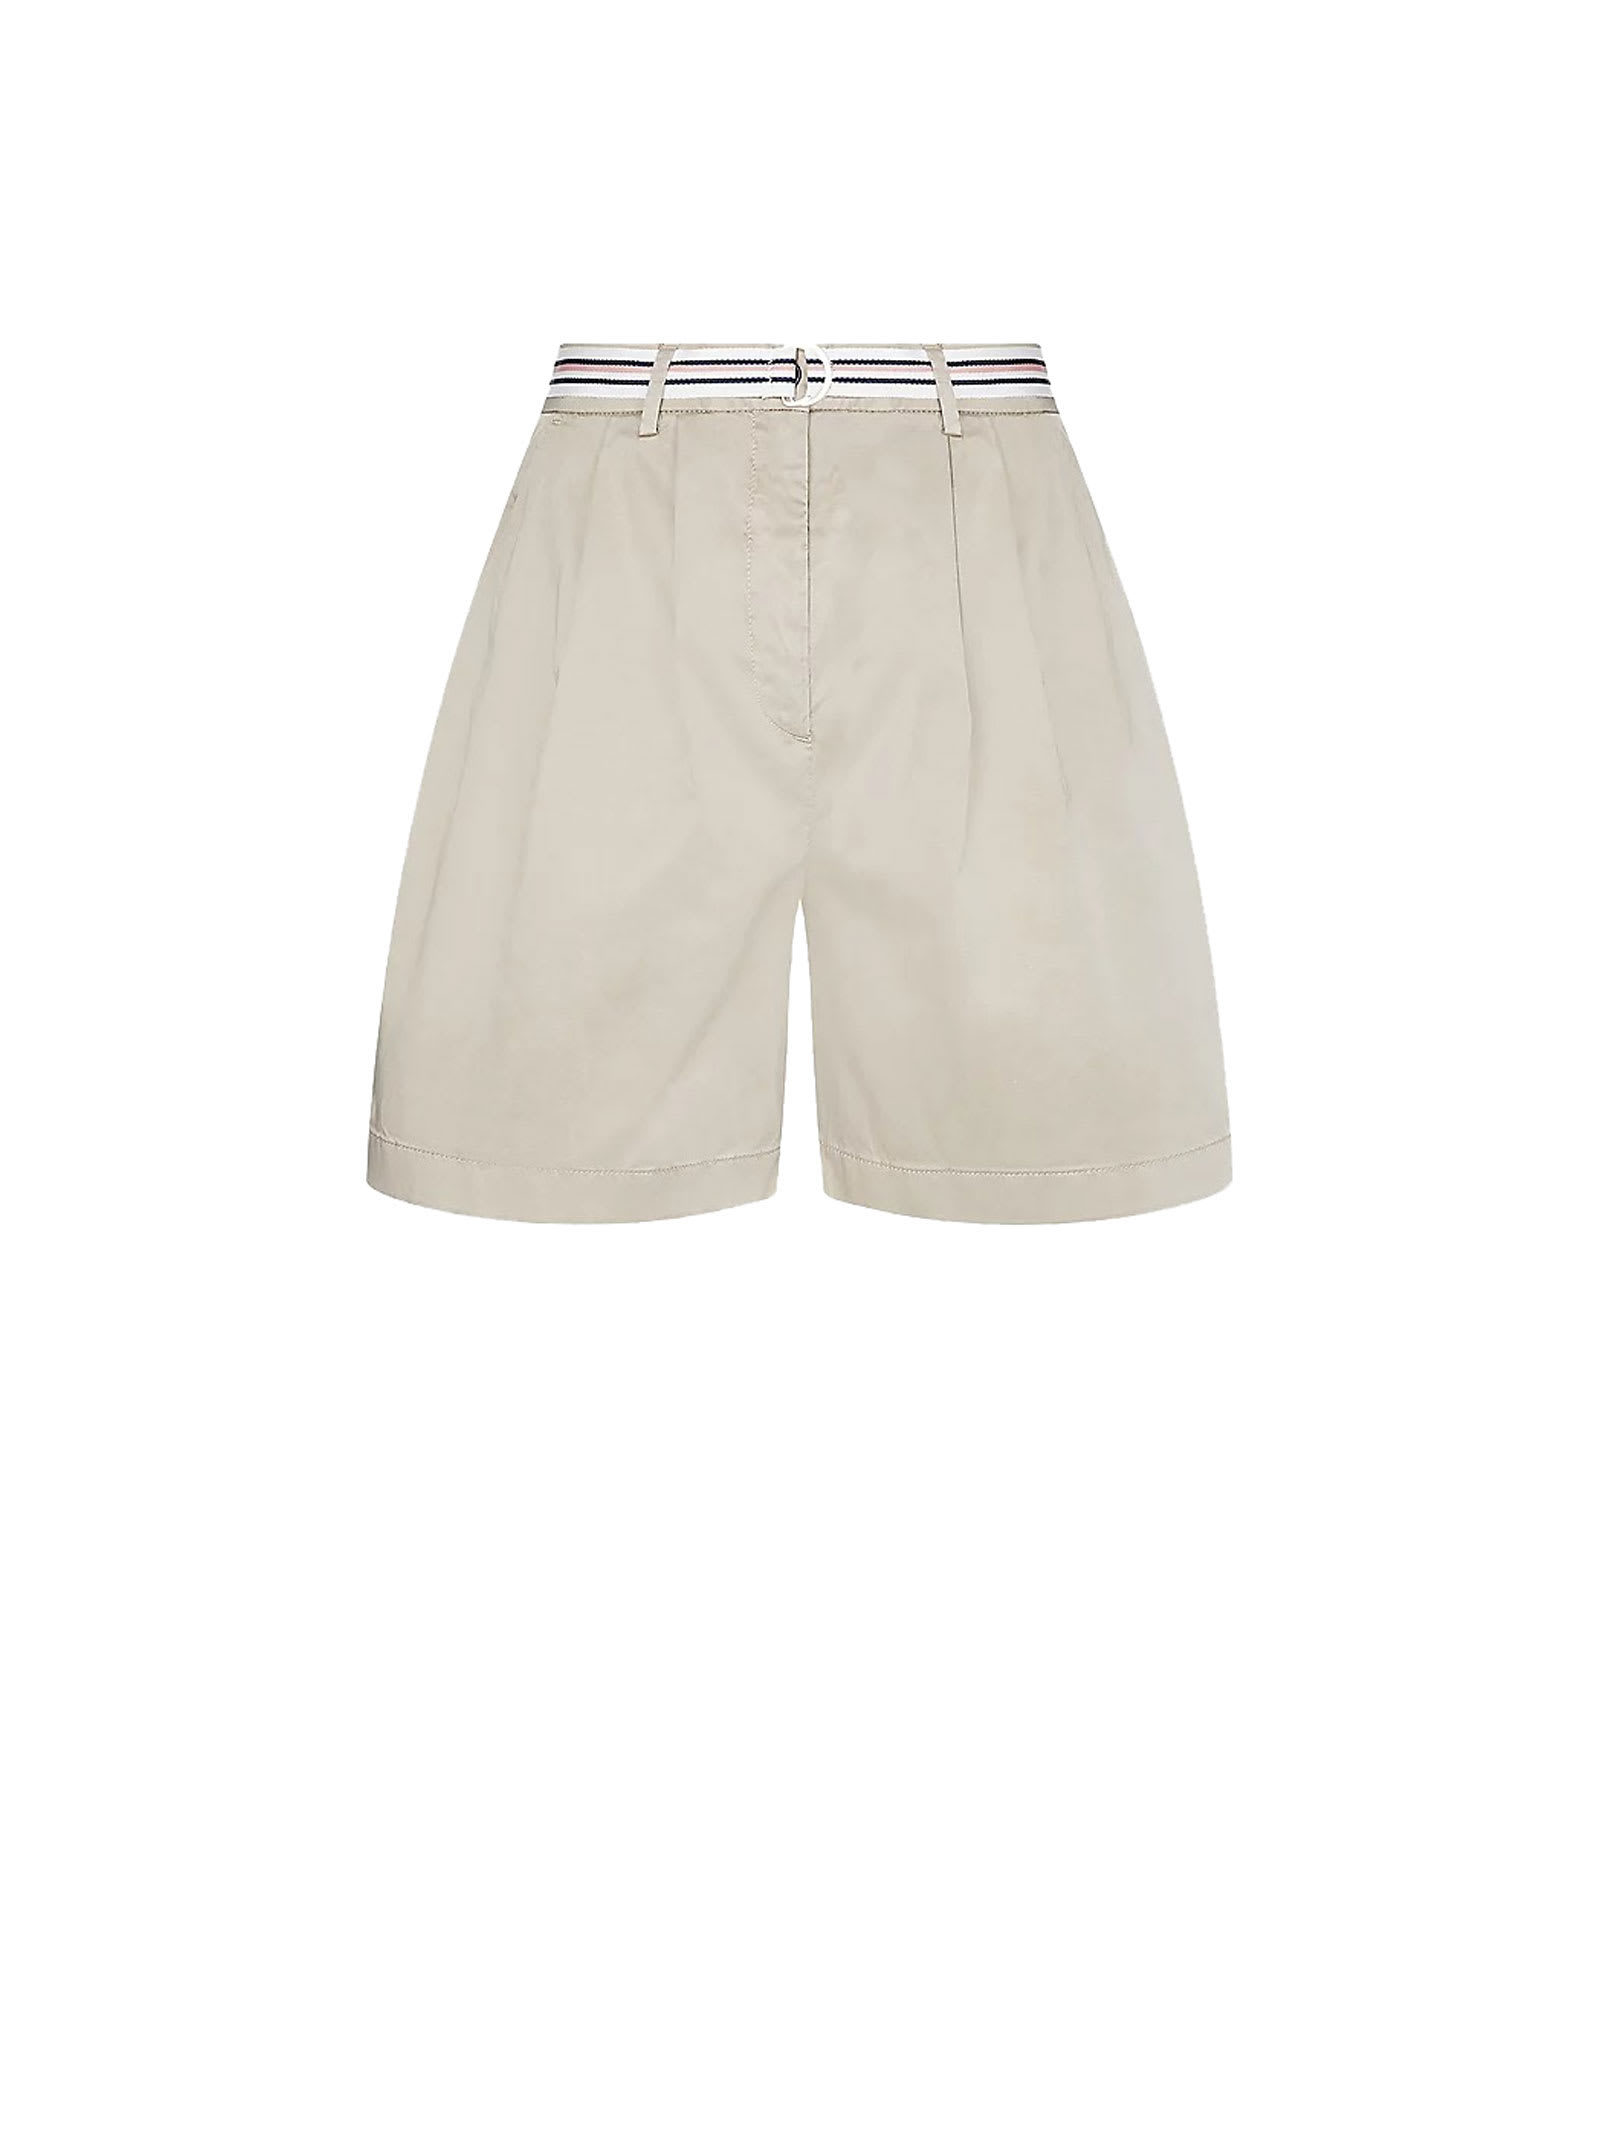 Tommy Hilfiger Bermuda Shorts In Beige Colored